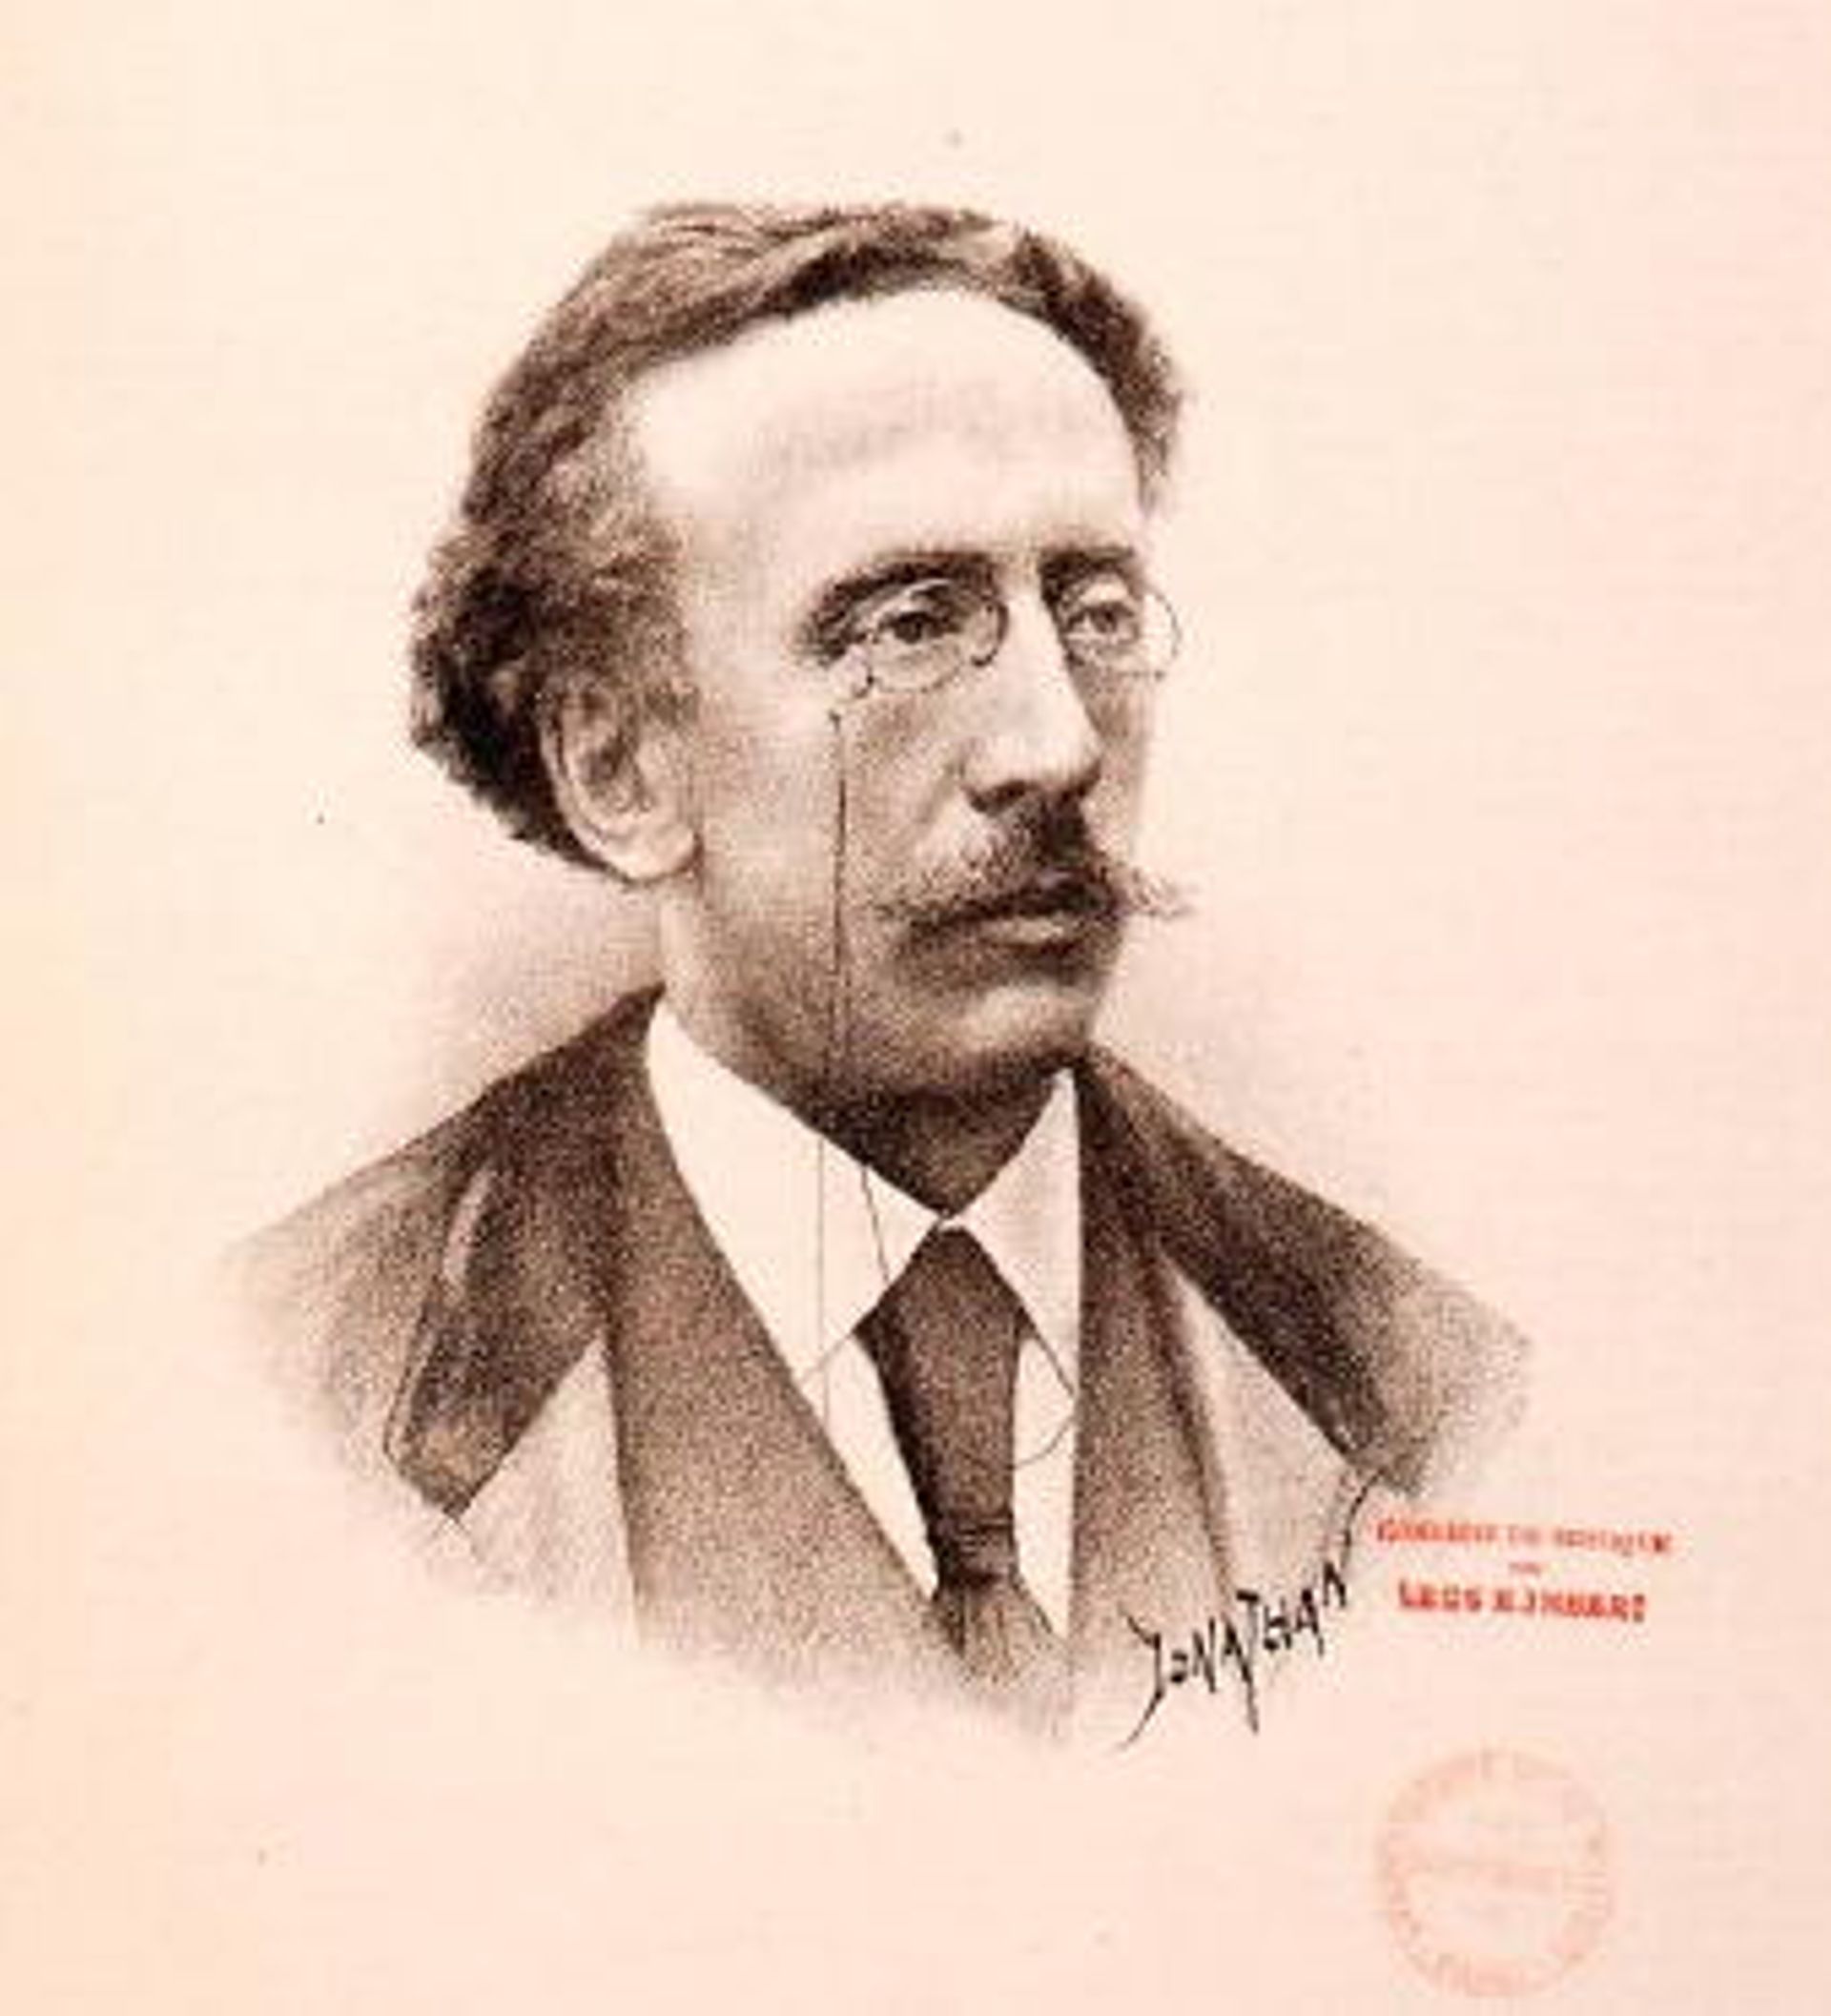 Joseph Dupont